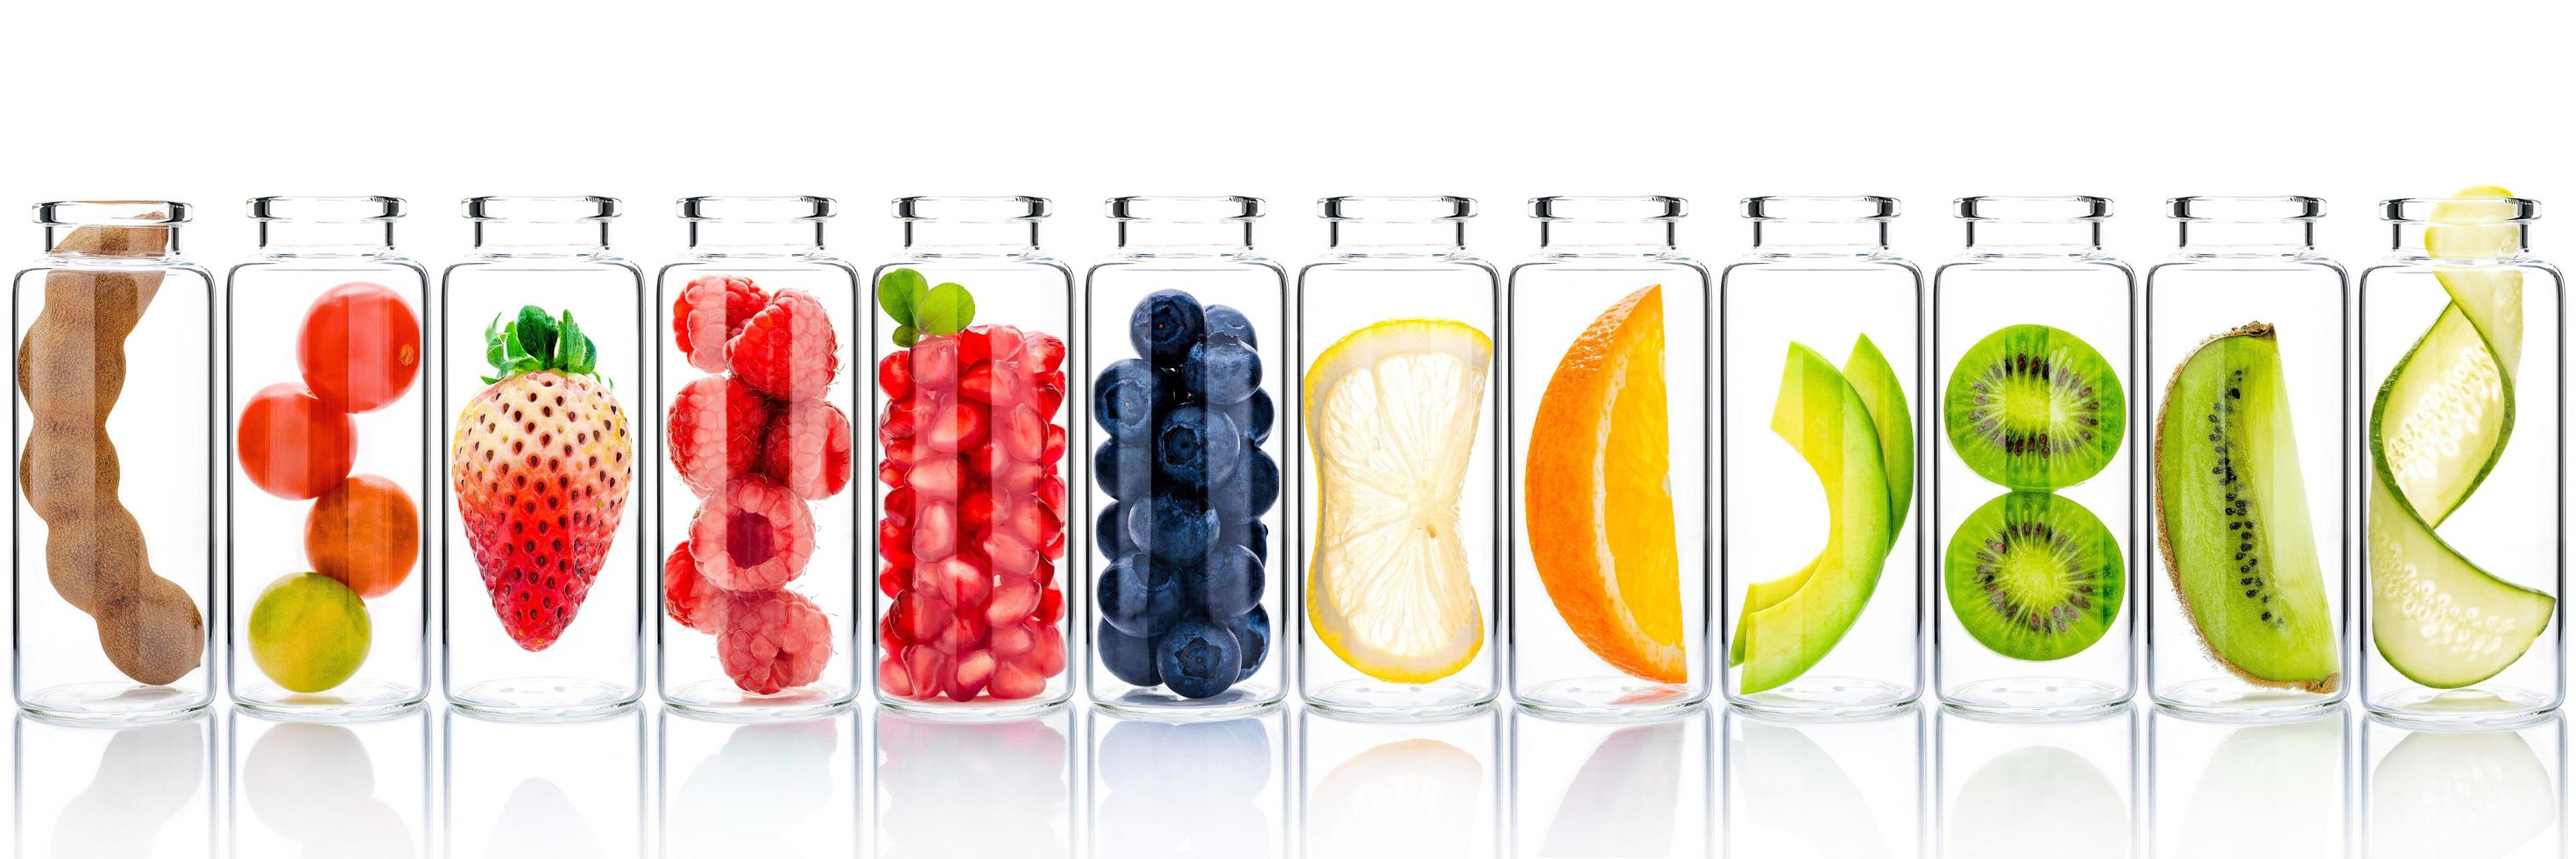 Homemade skincare with fruit ingredients of avocado, orange, blueberry, pomegranate, kiwi, lemon, strawberry, and raspberry in glass bottles isolated on a white background. photo